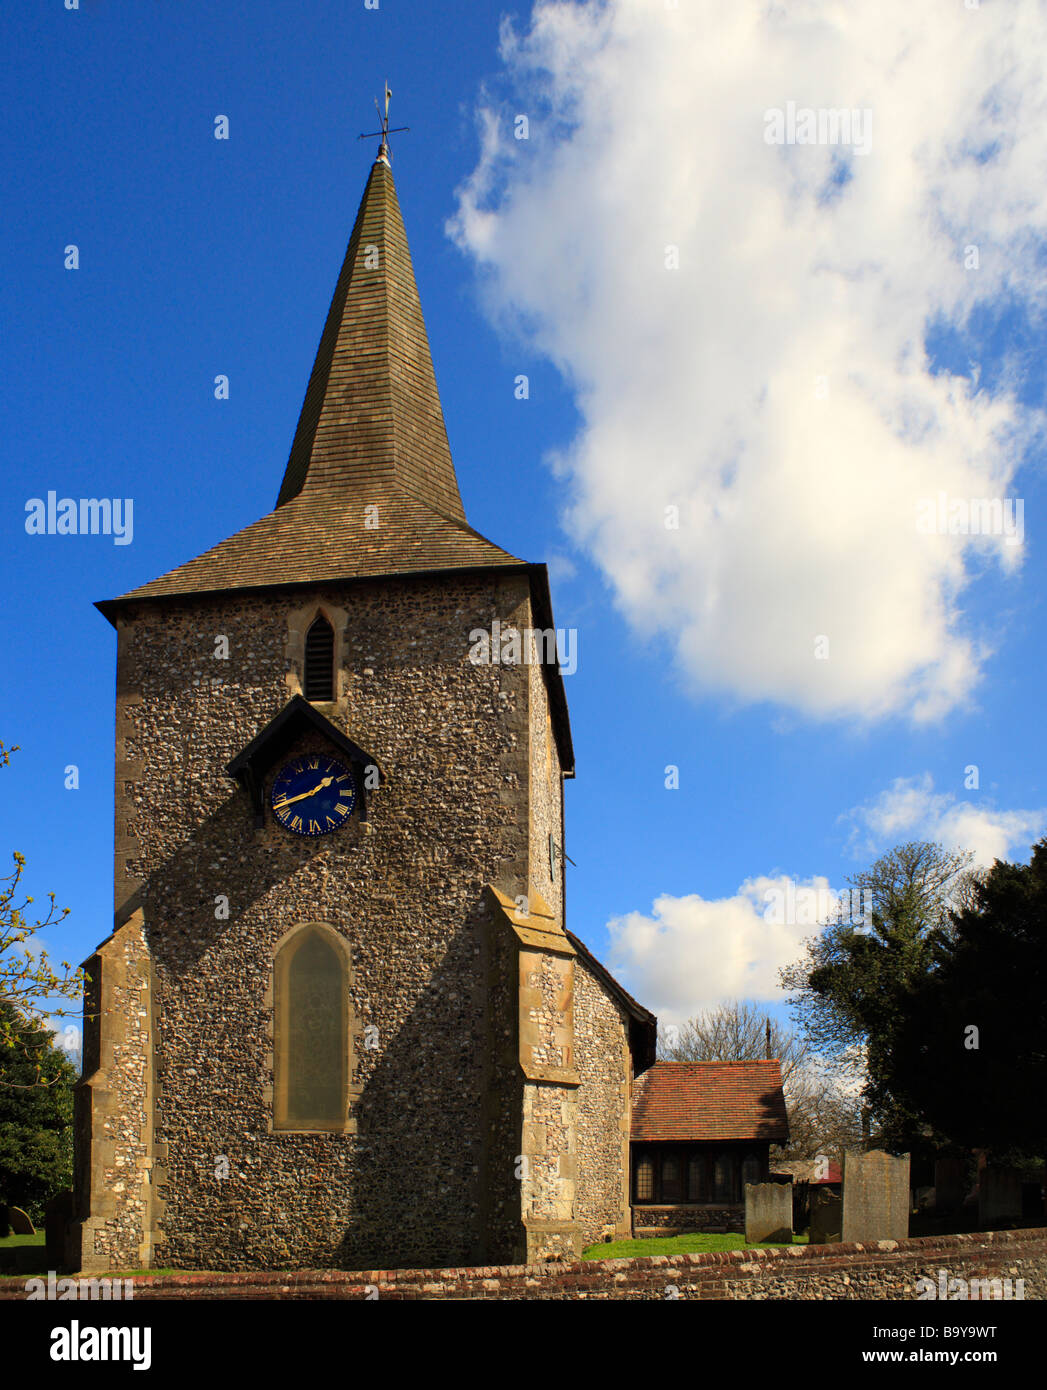 St Marys church, Downe, Bromley, Kent, England, UK. Stock Photo